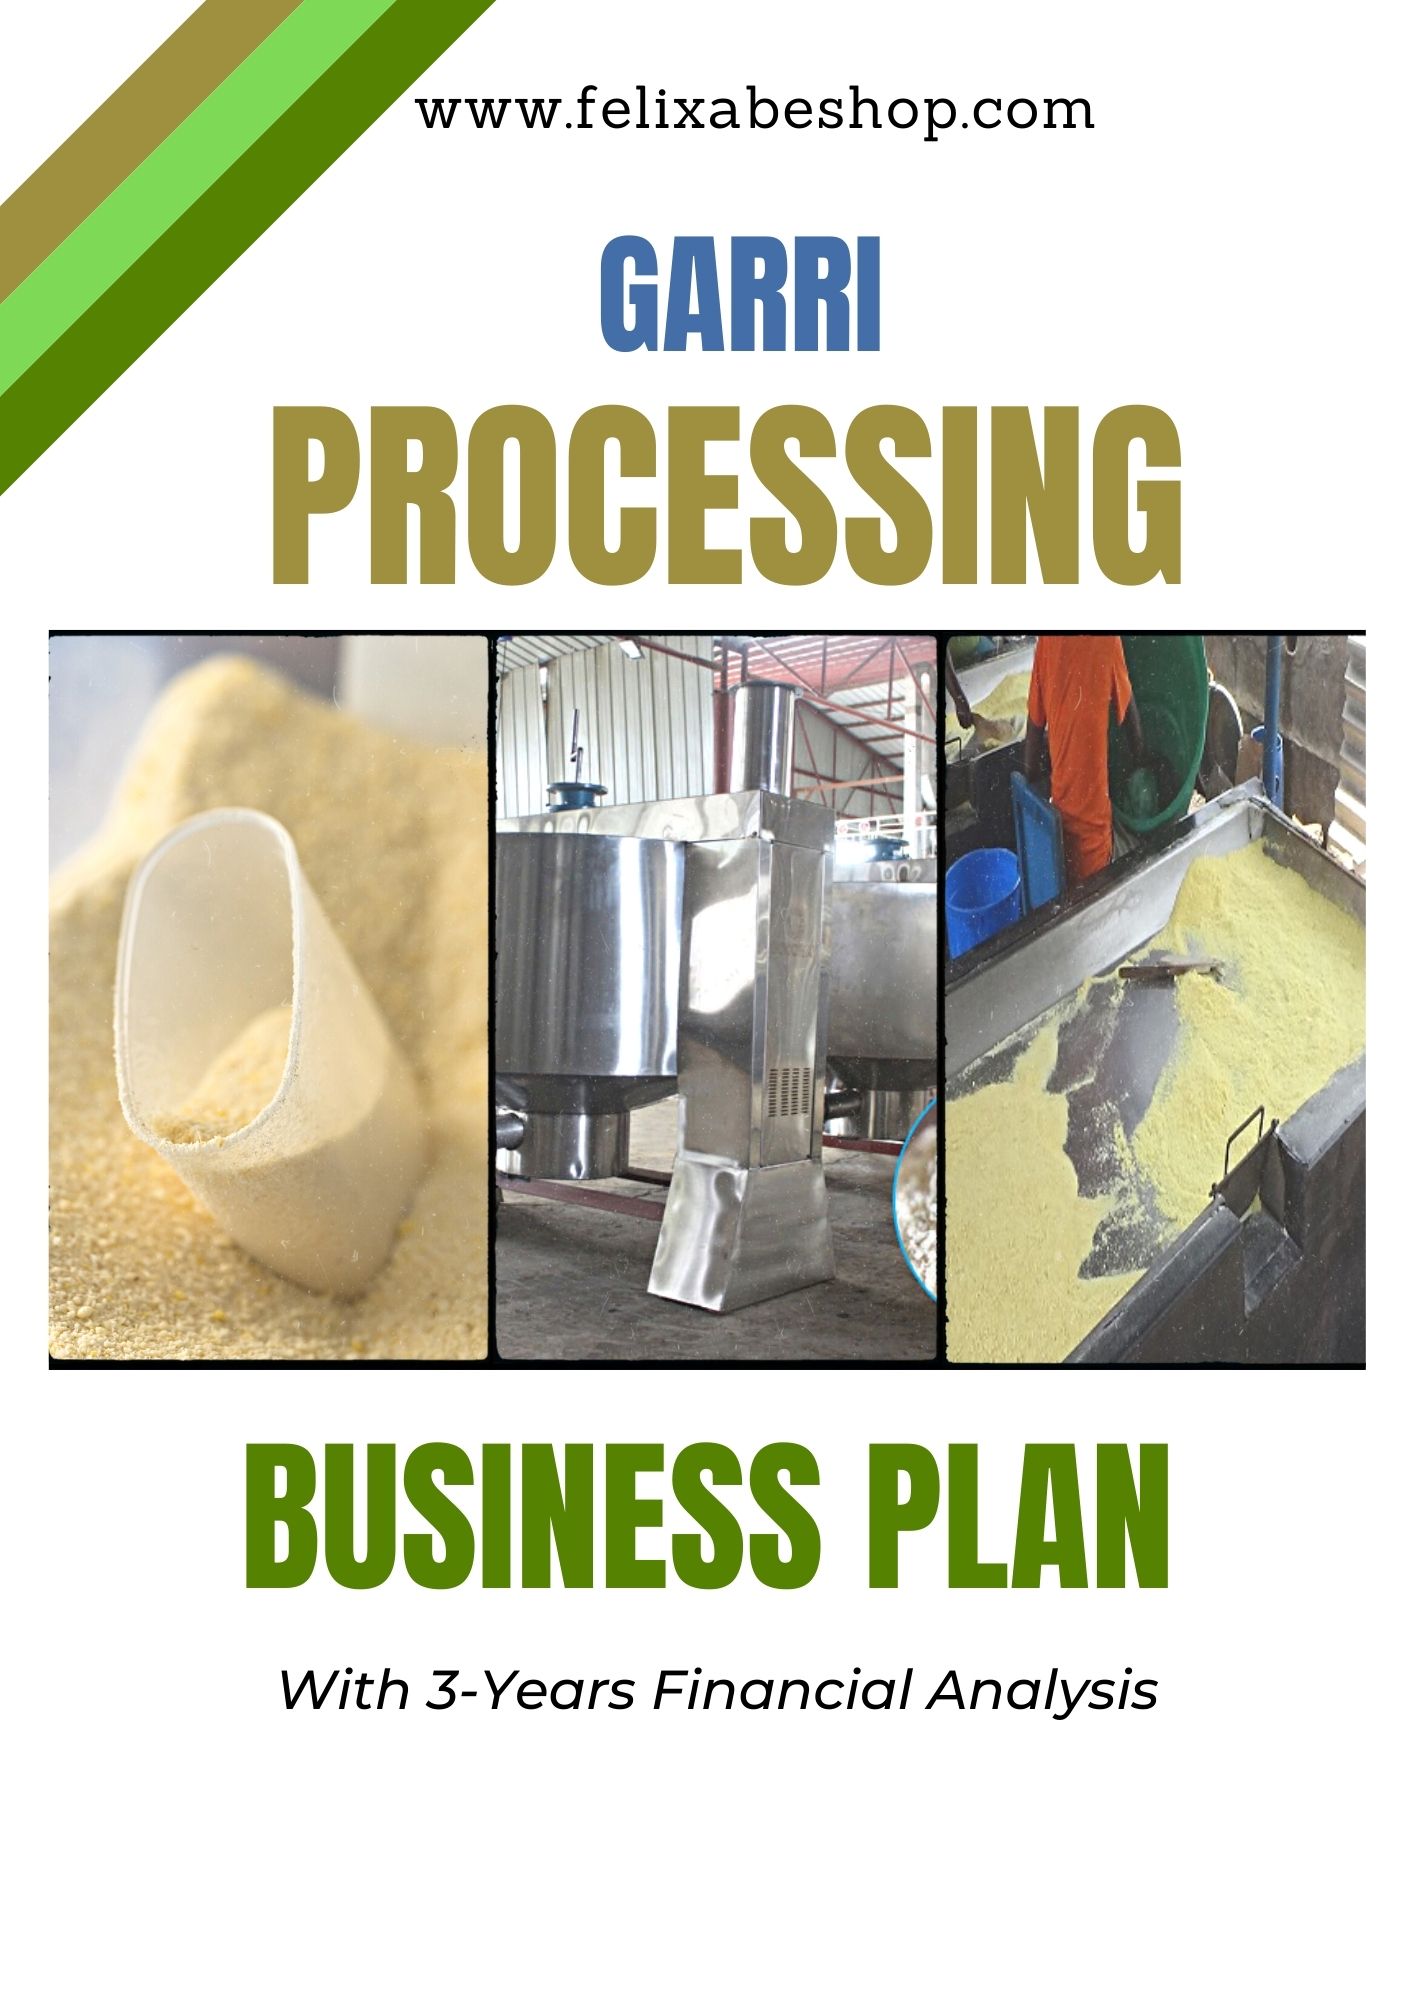 business plan on garri production pdf